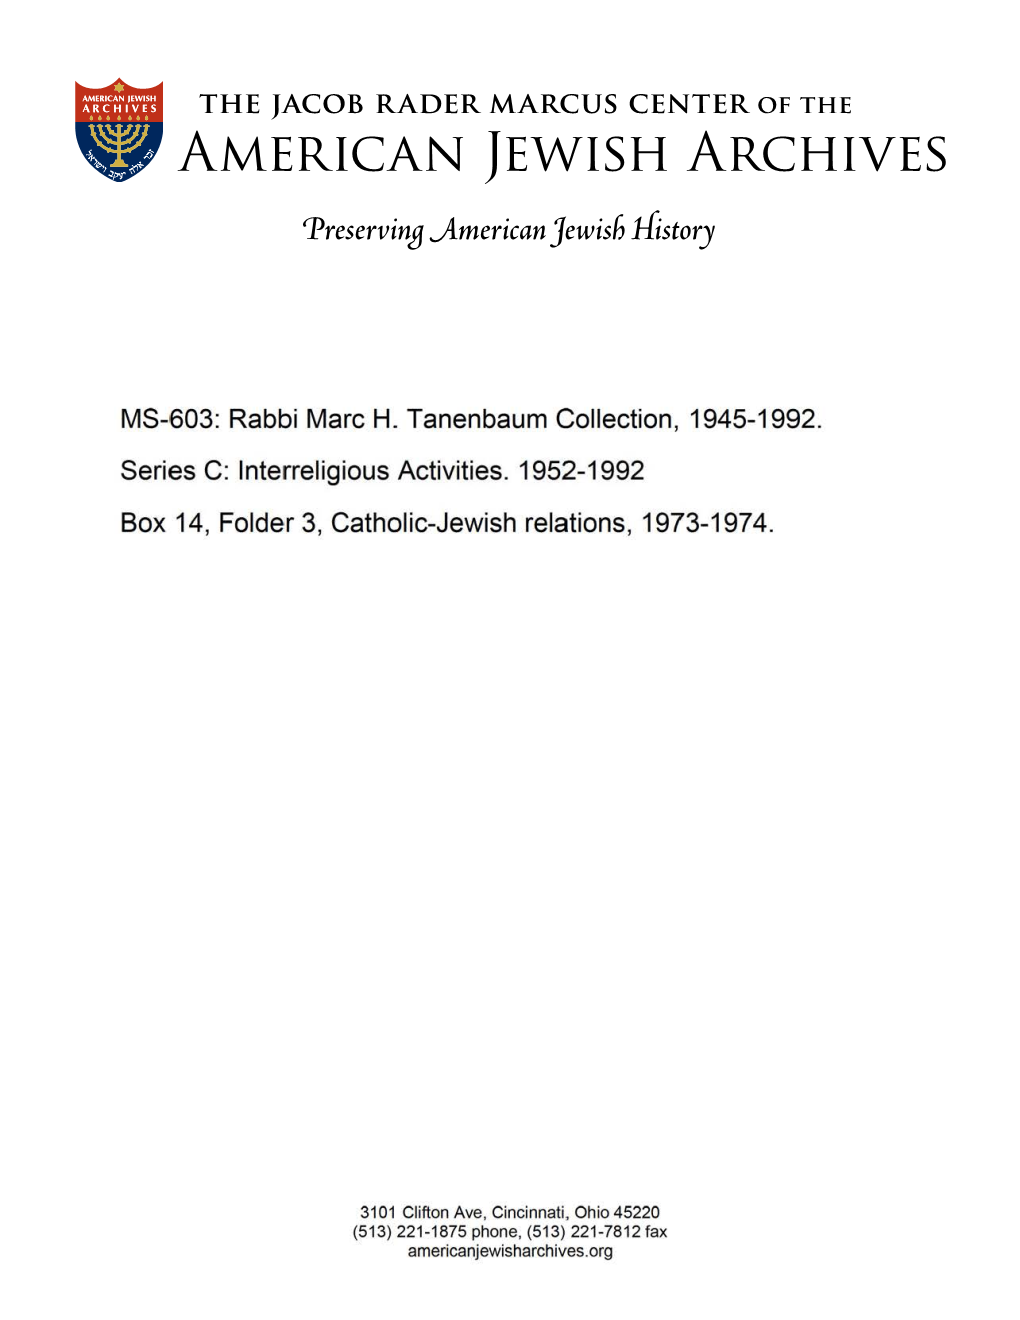 MS-603: Rabbi Marc H. Tanenbaum Collection, 1945-1992. Series C